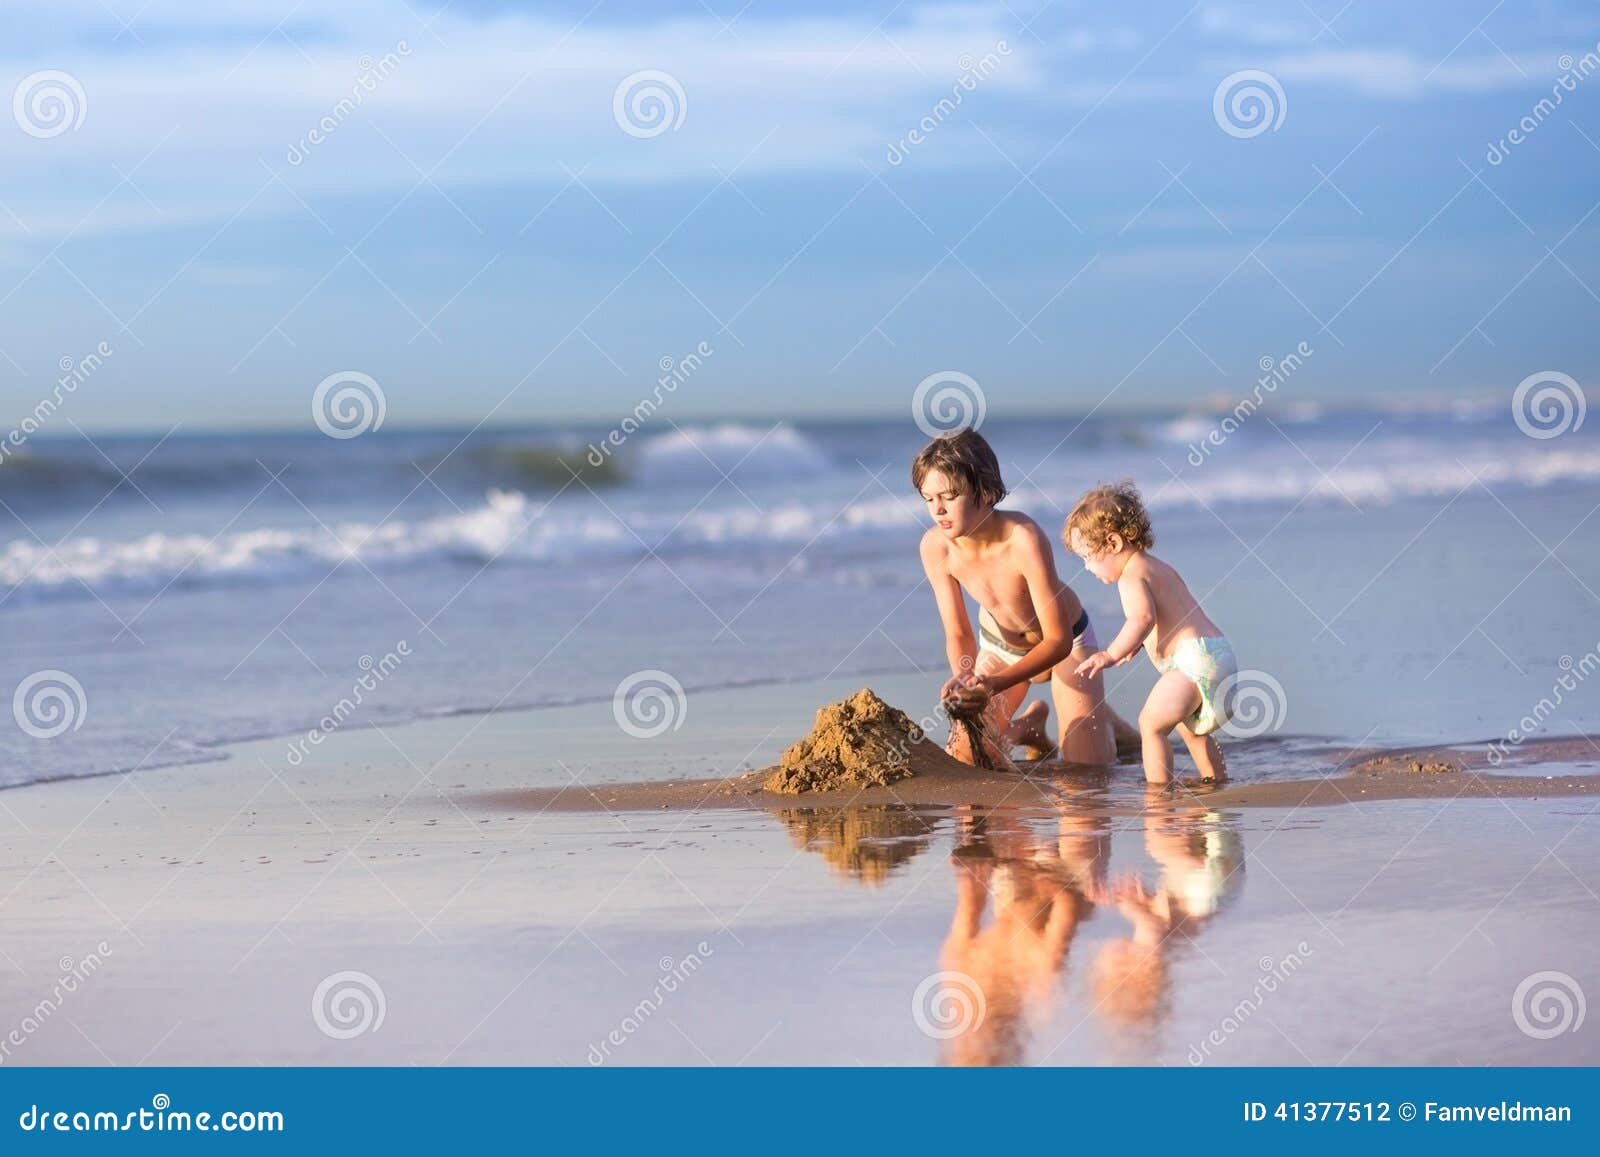 dana chanley add brother sister nude beach photo